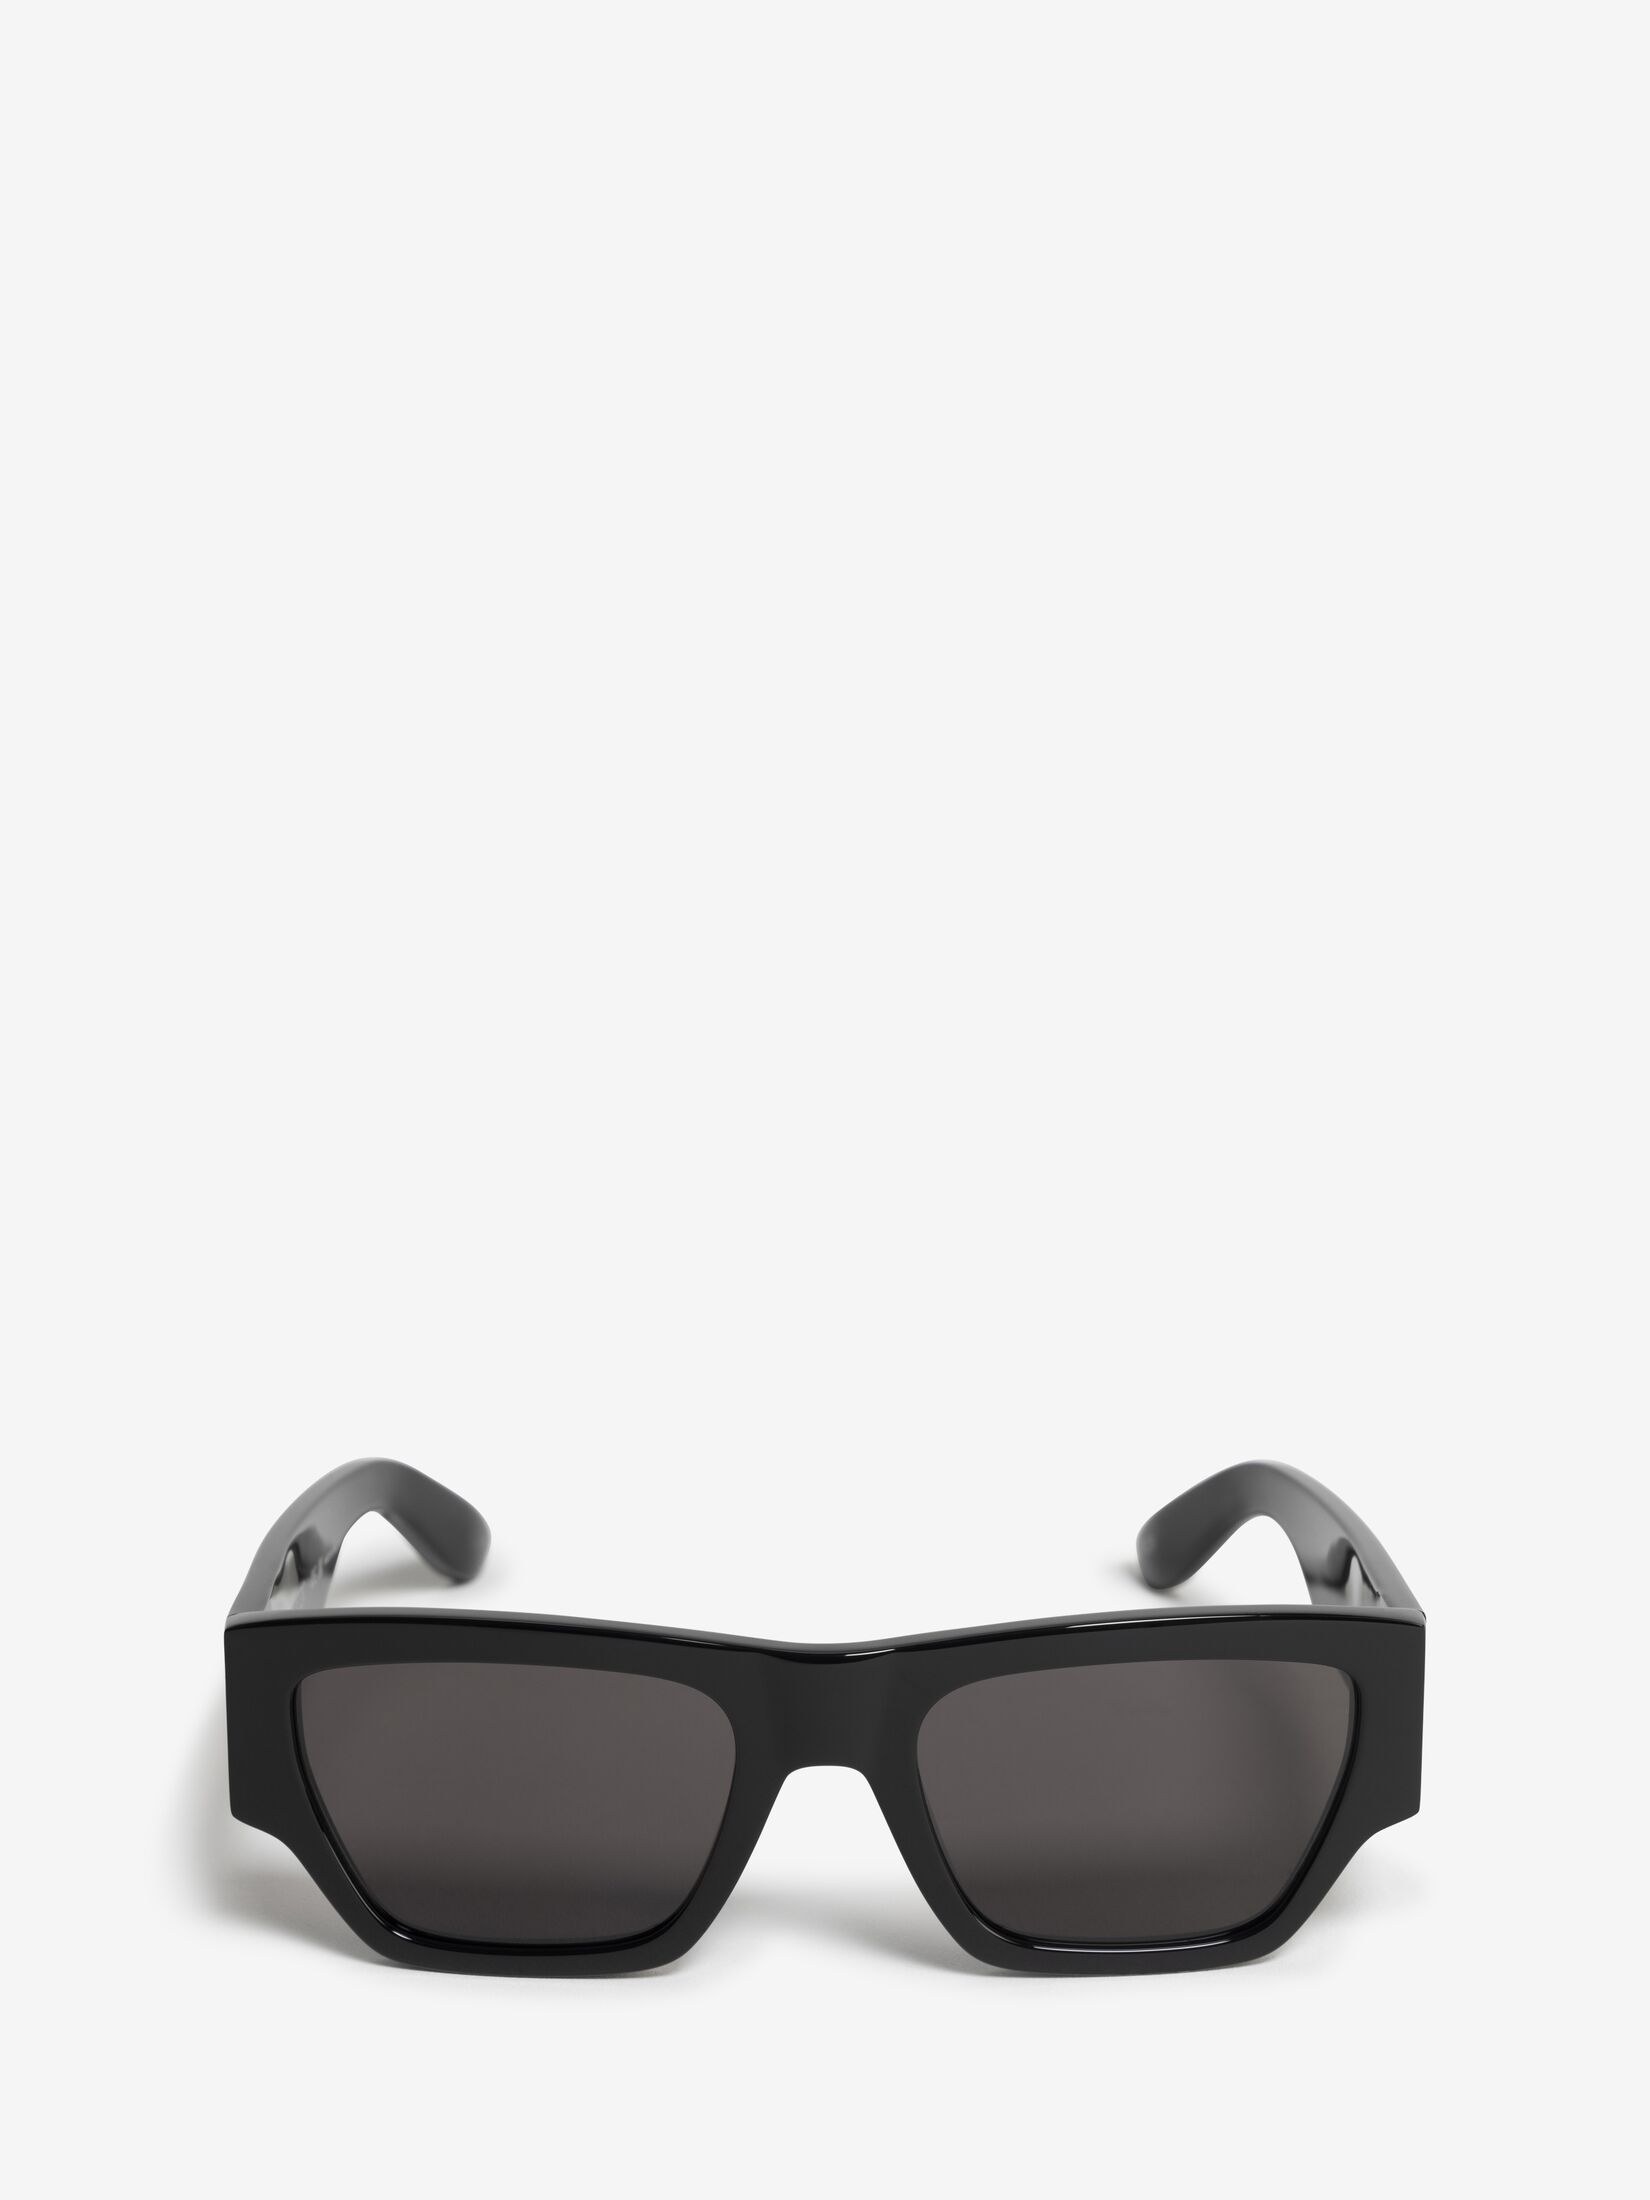 McQueen Angled Rectangular Sunglasses